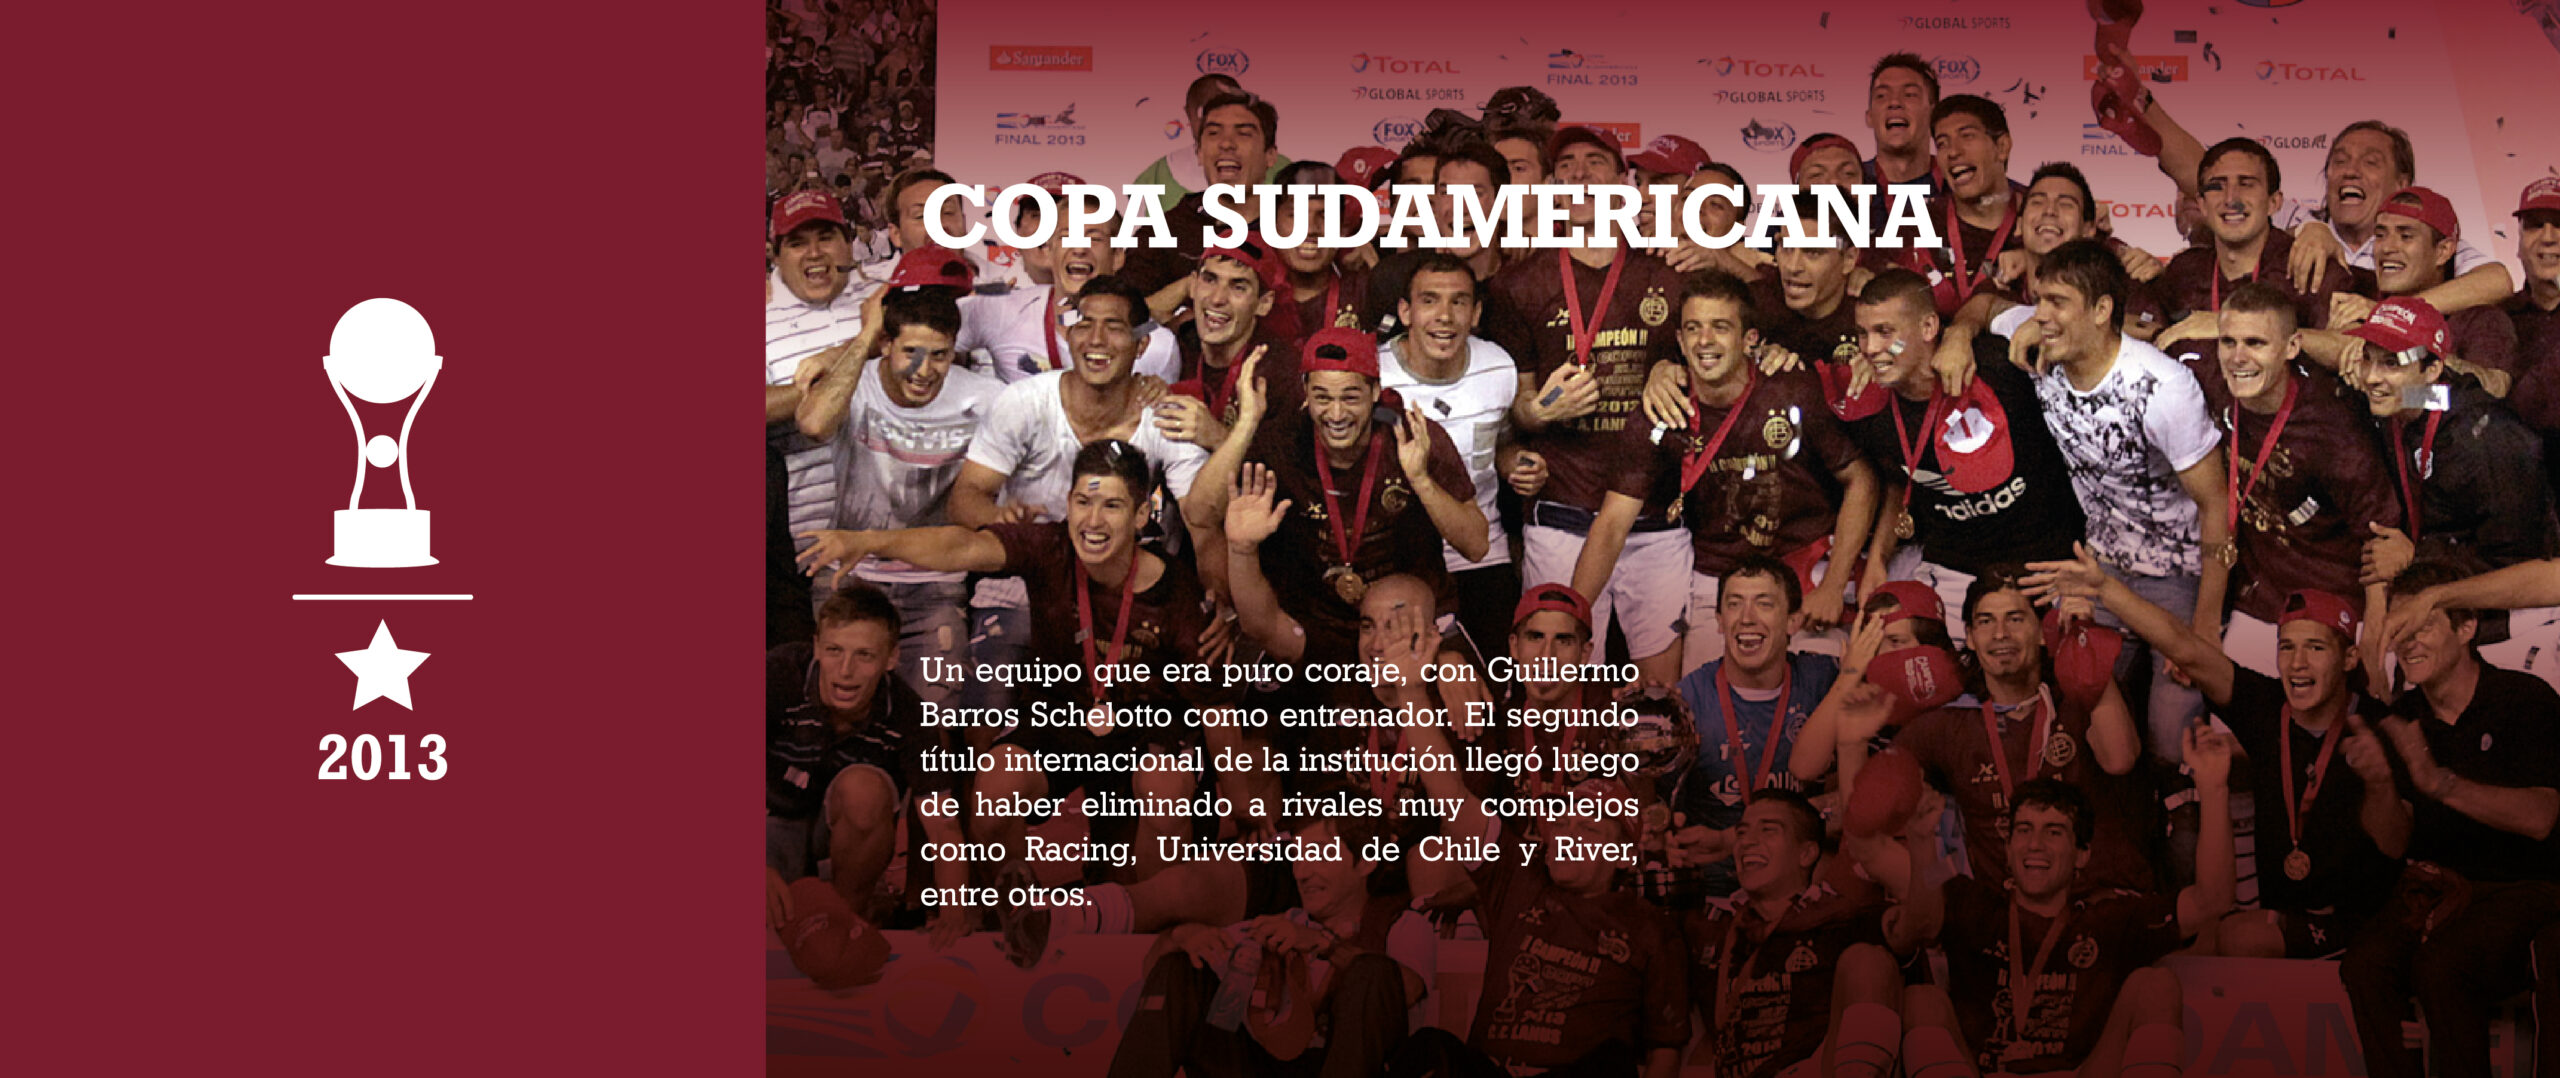 03. Sudamericana